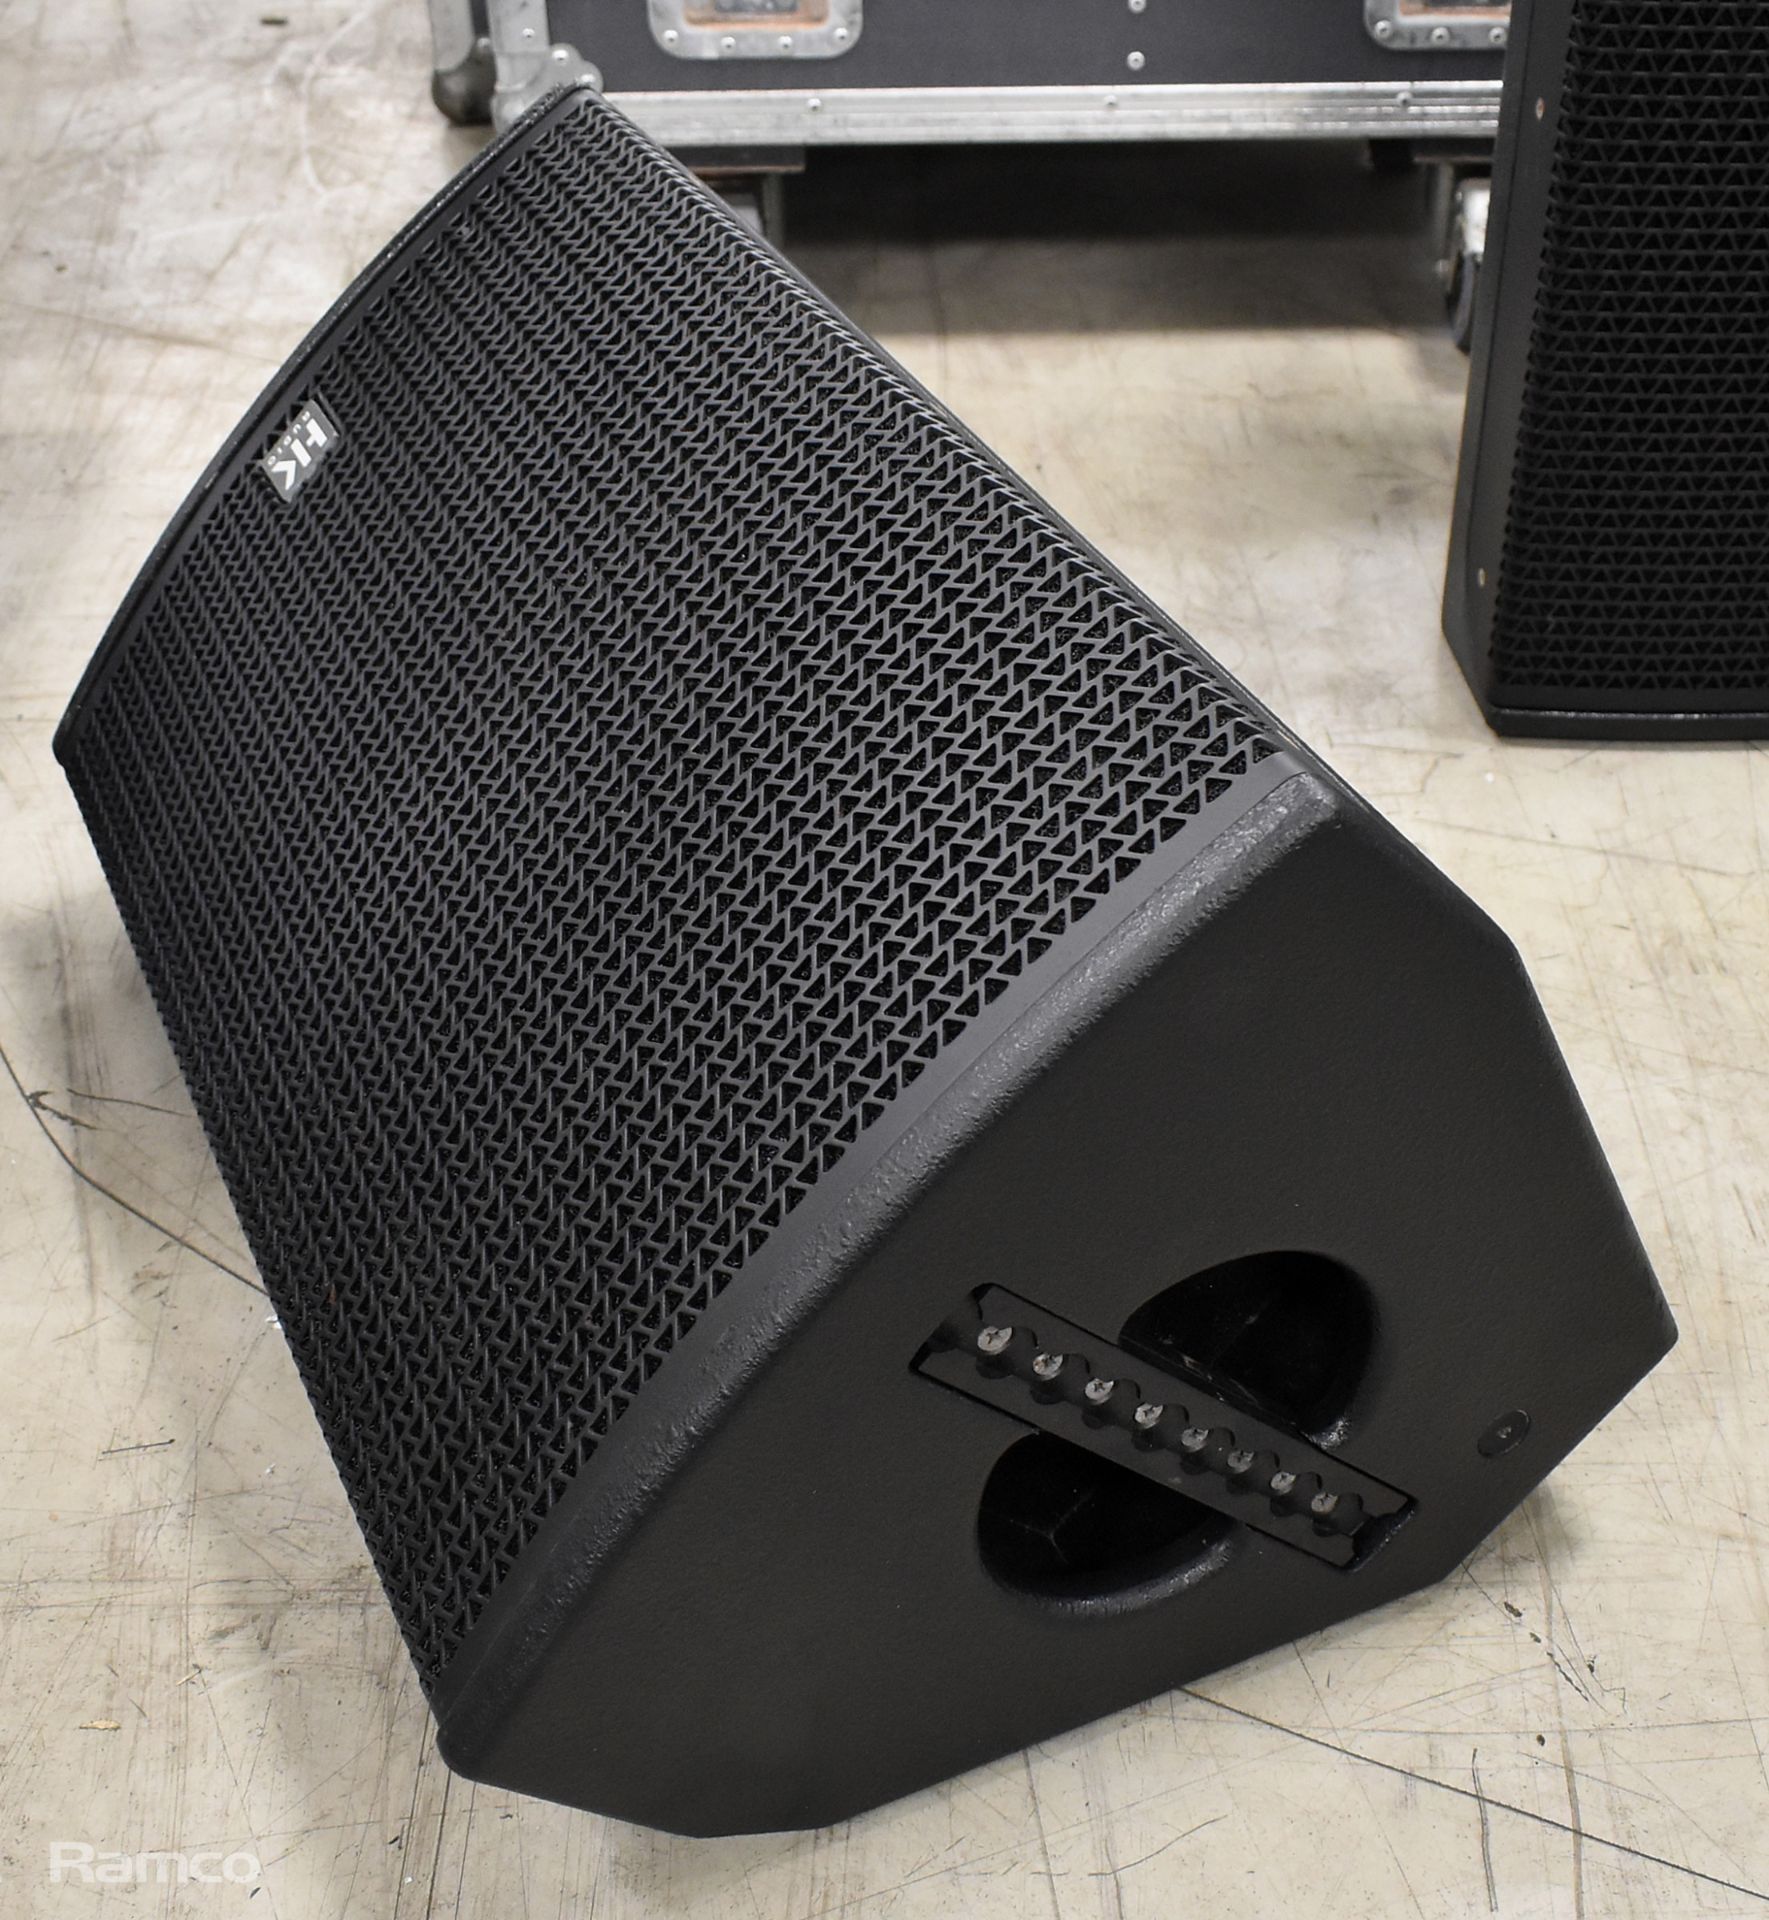 2x HK Contour Series CT 112 speakers in flight case - FOH & monitor speakers - Image 7 of 13